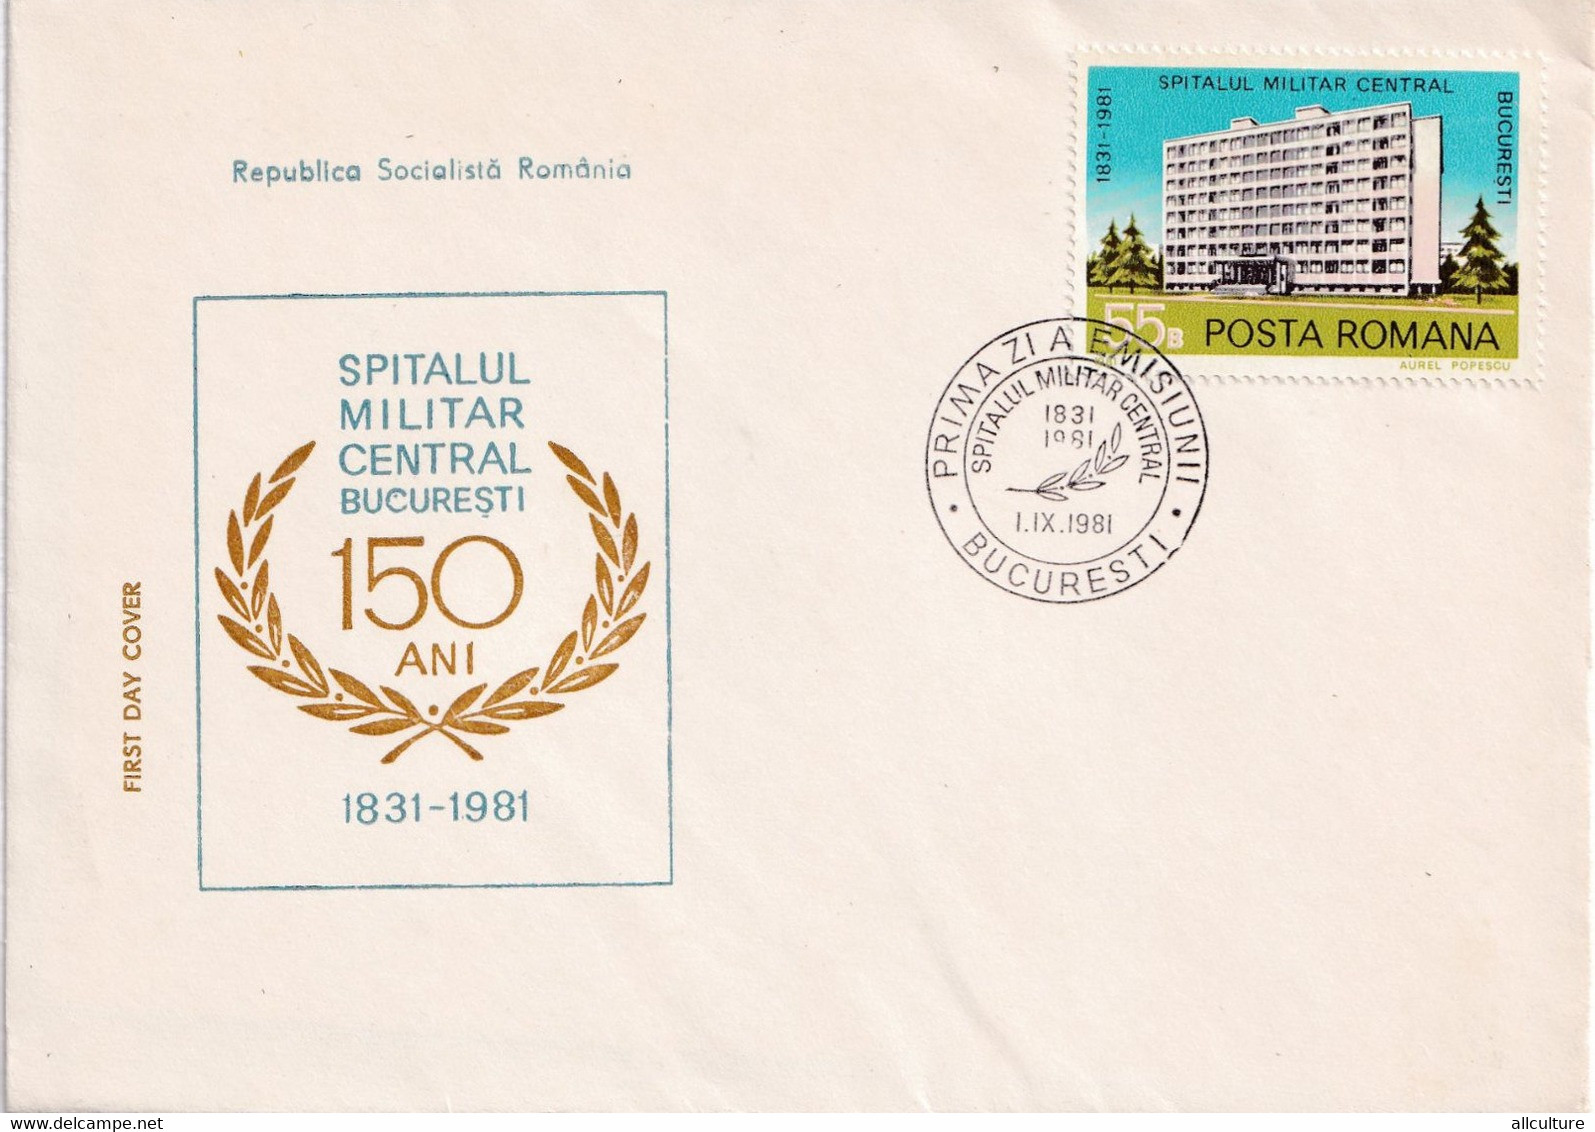 A2946- Spitalul Militar Central 1831-1981, Bucuresti 1981 Posta Romana  Republica Socialista Romania   FDC - FDC